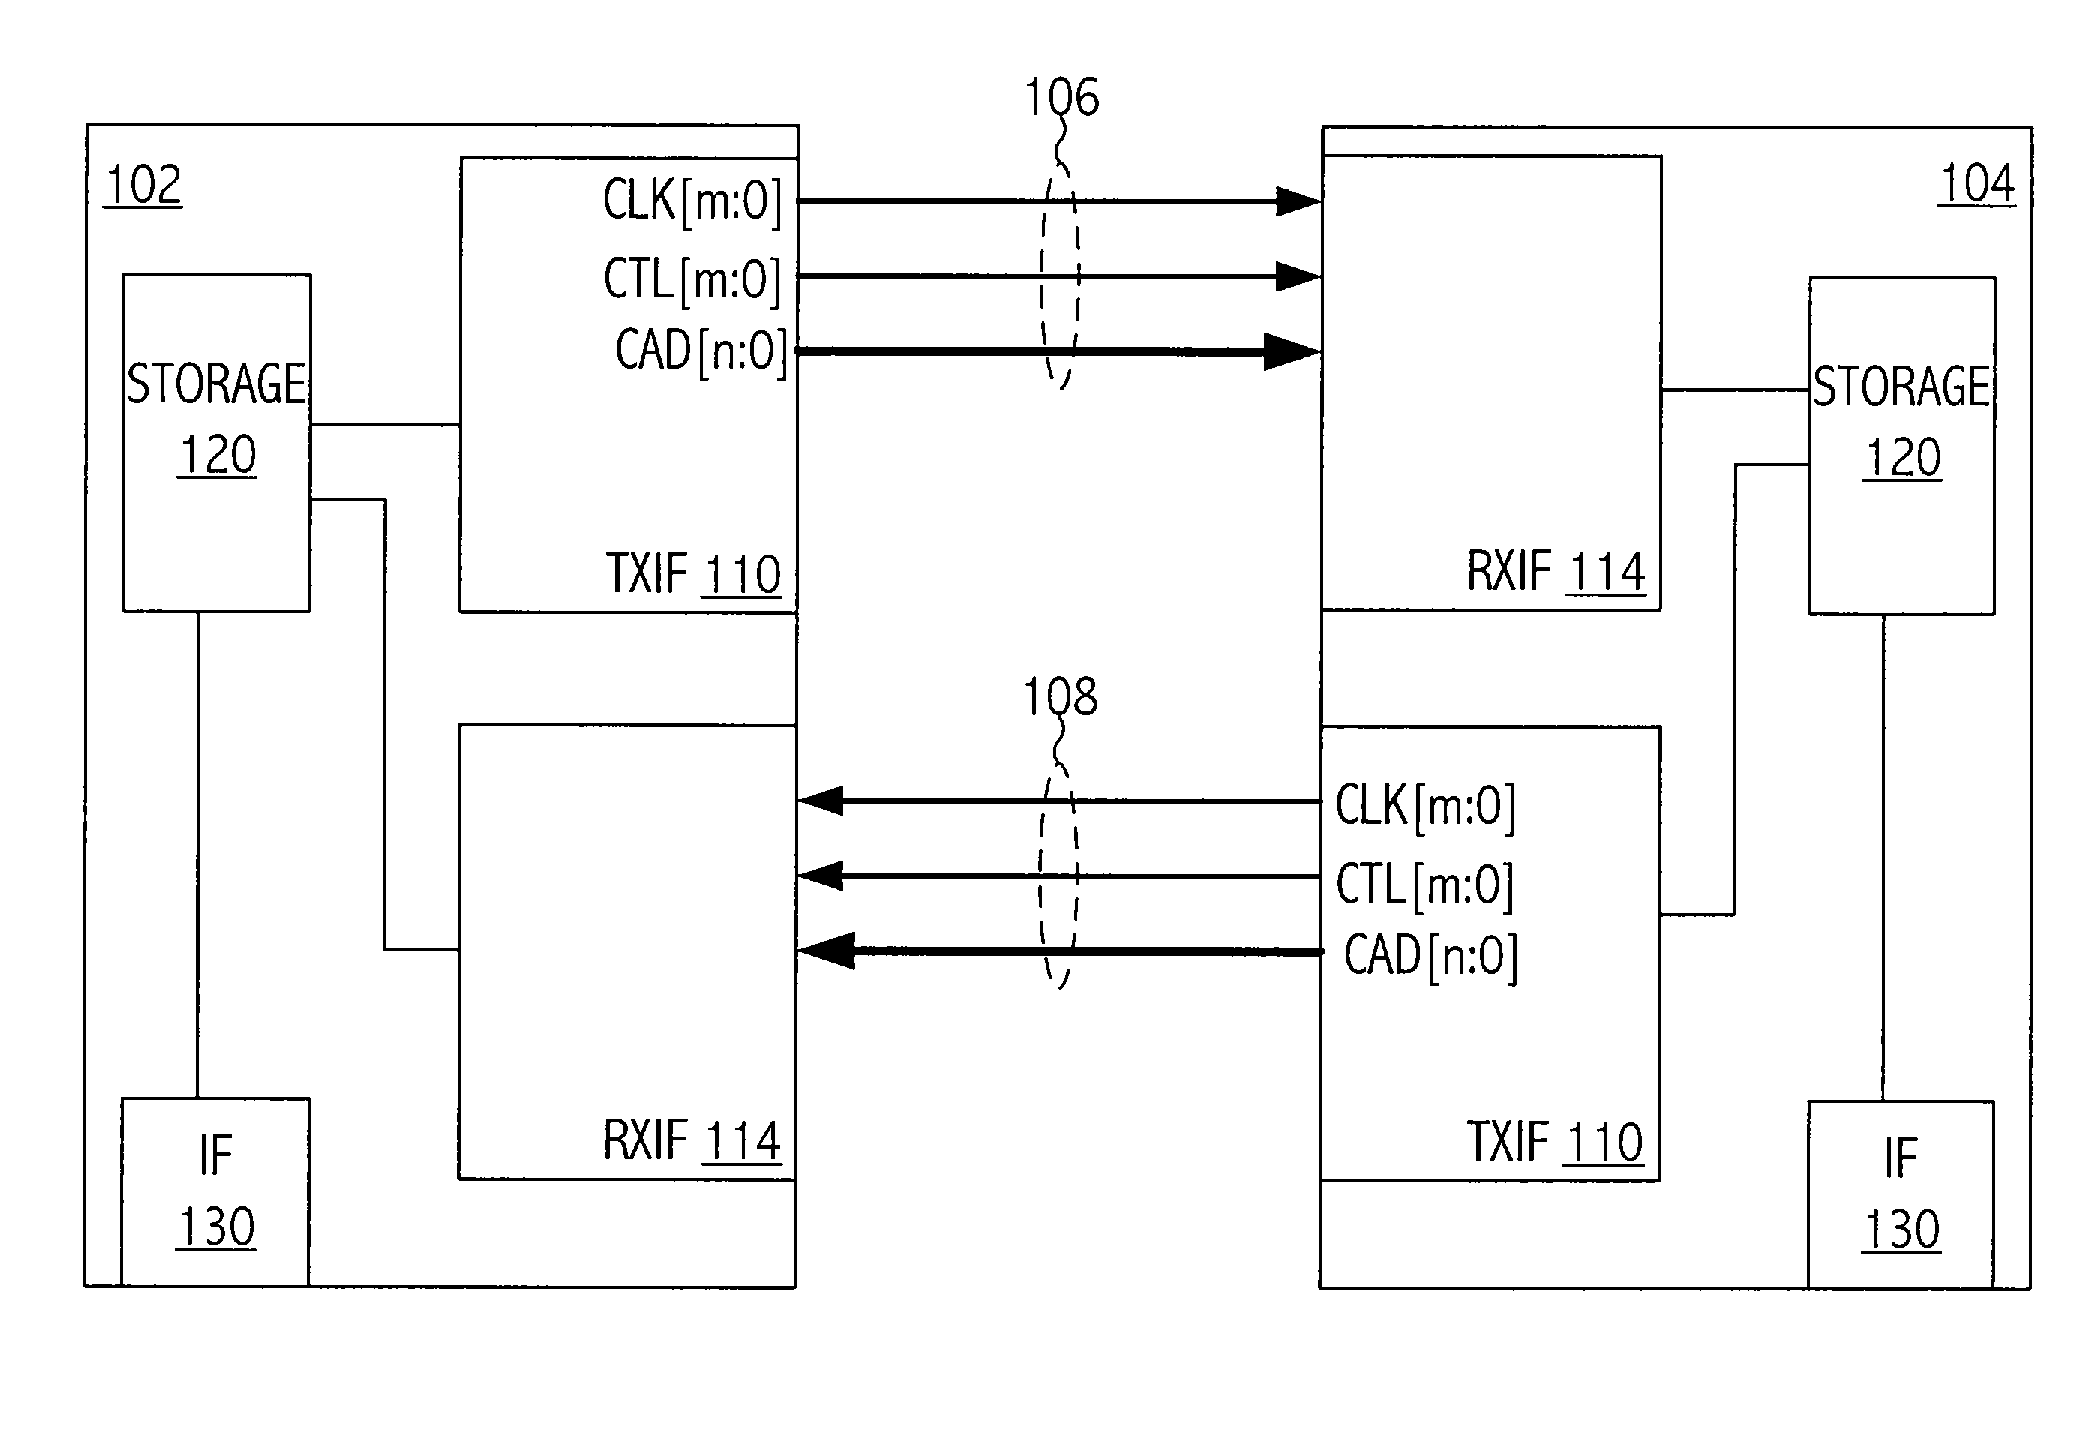 Transmitter voltage and receiver time margining